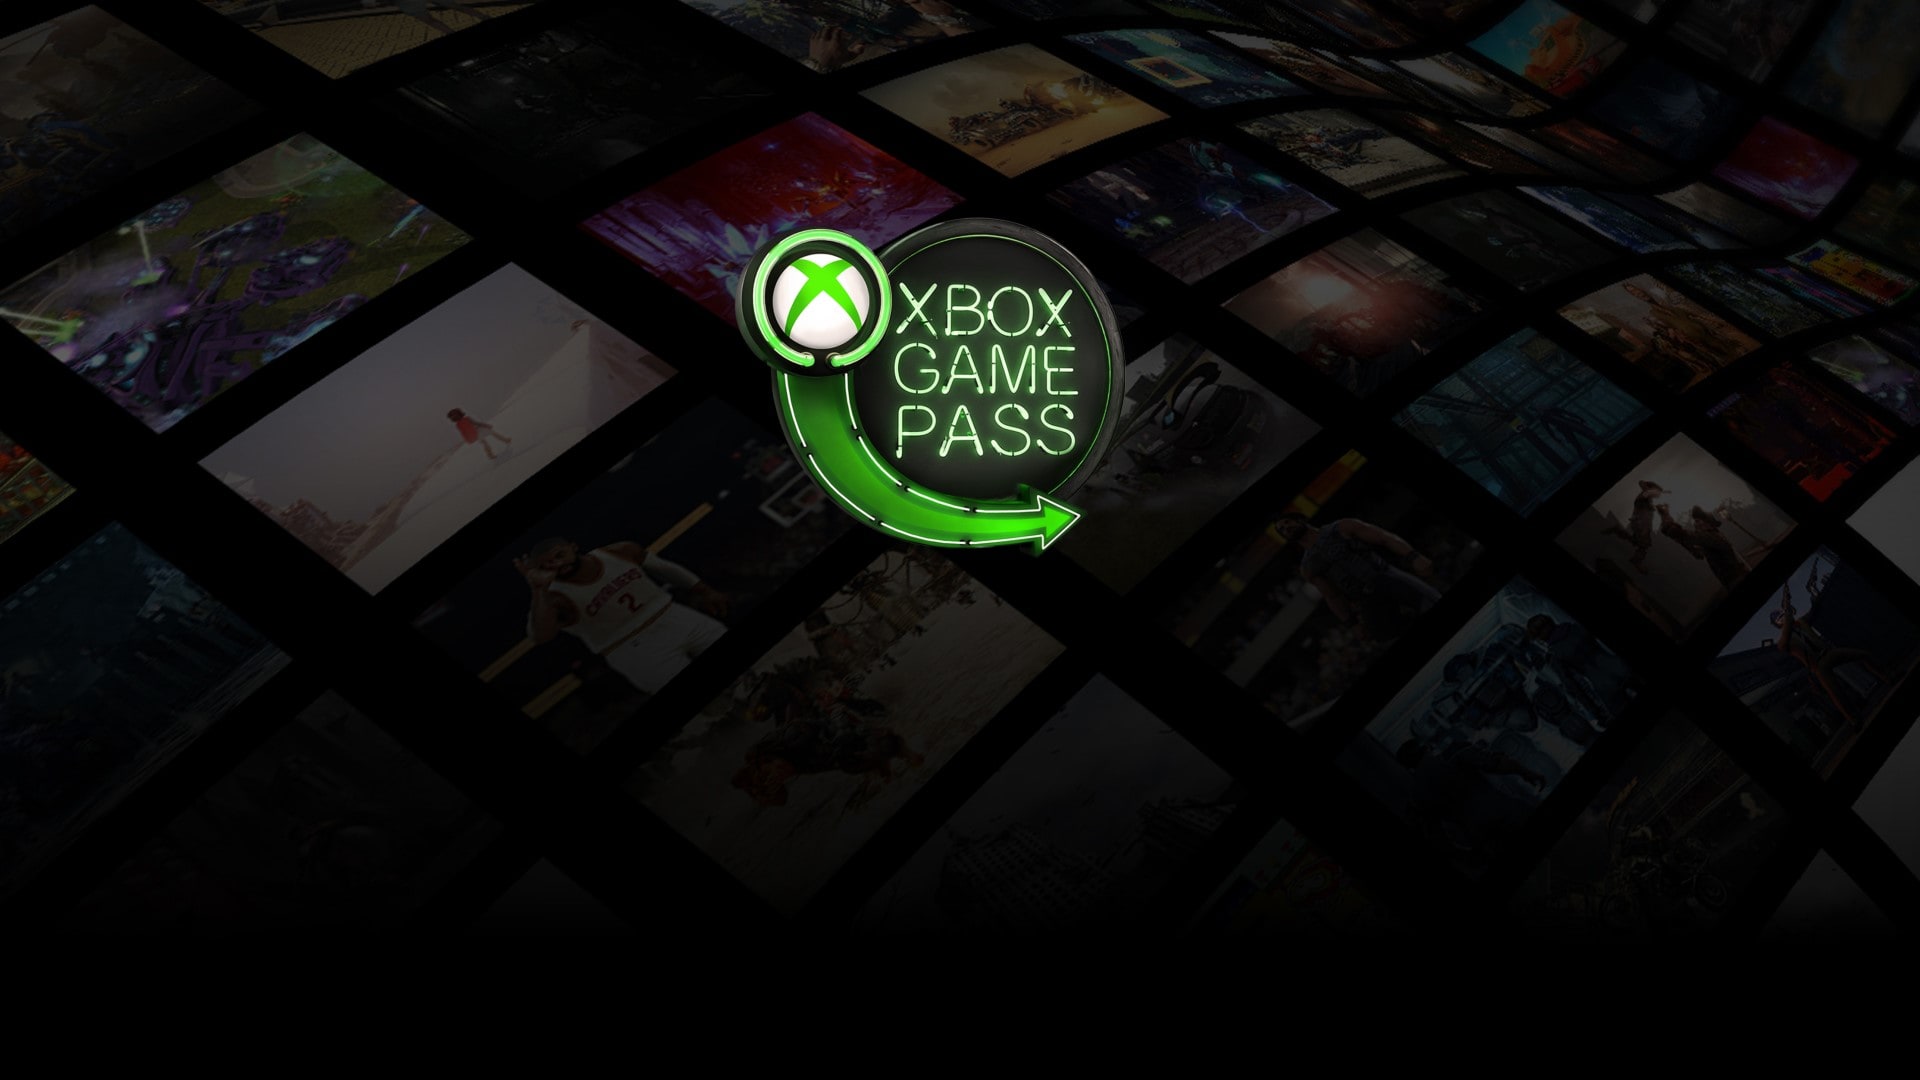 Xbox Game Pass คิดเป็น 15% ของรายได้จากฝั่งเกมของ Microsoft